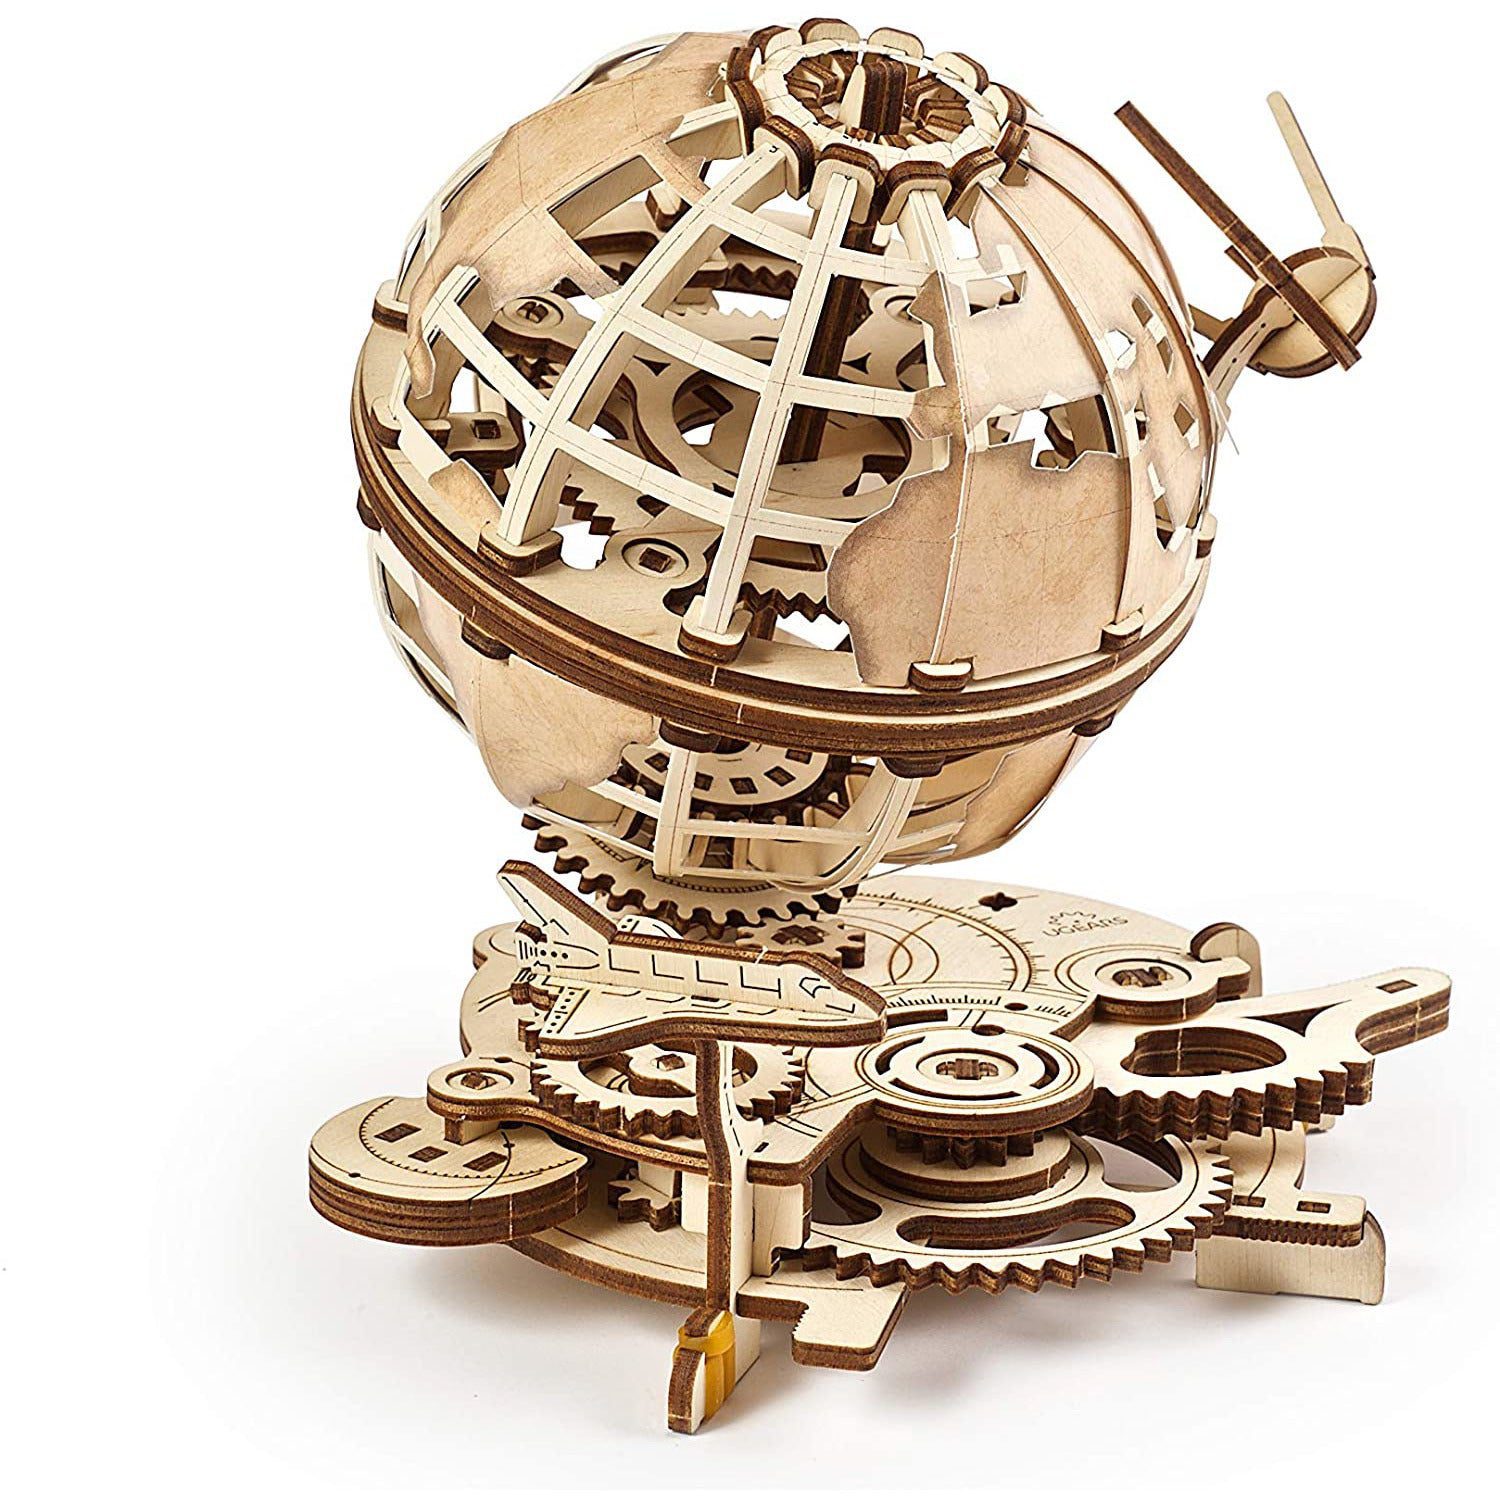 Ugears Wooden Globus 3D Model Kit / DIY / 184 Pieces